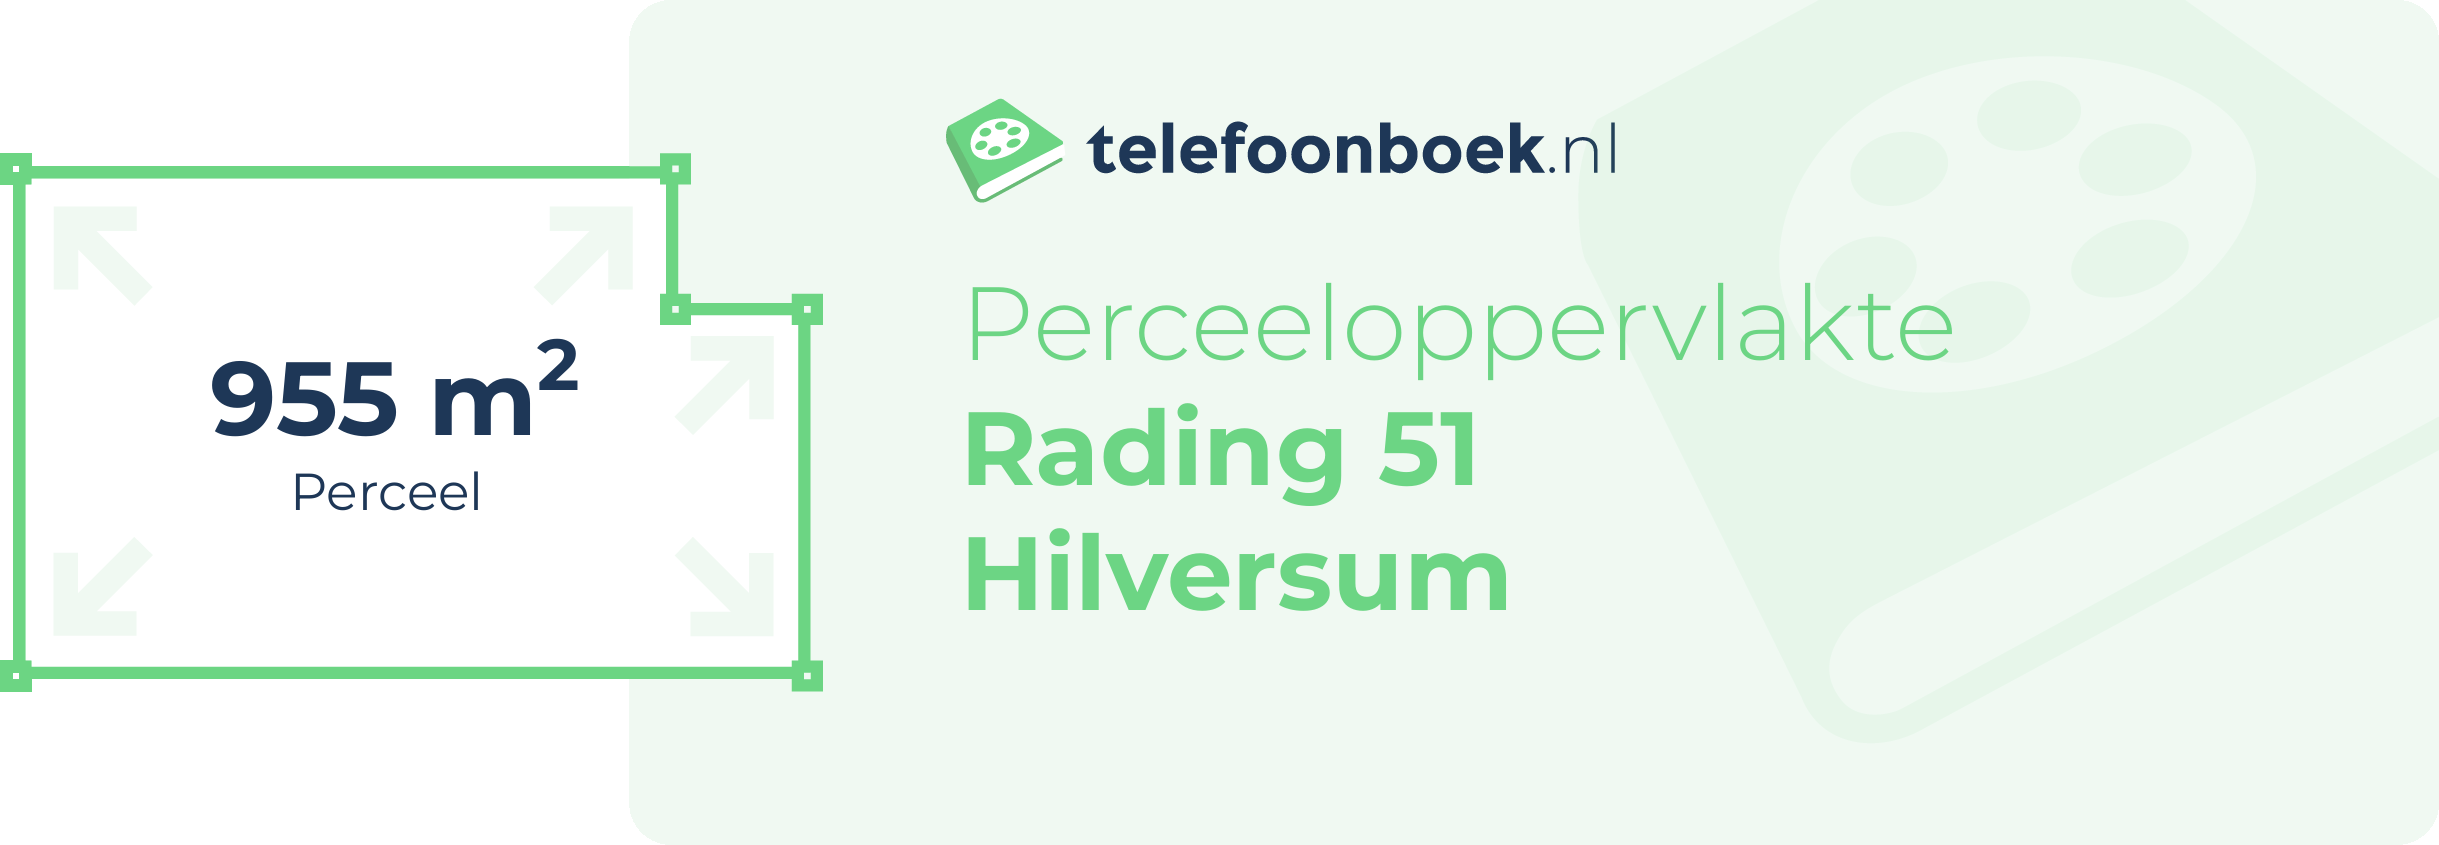 Perceeloppervlakte Rading 51 Hilversum